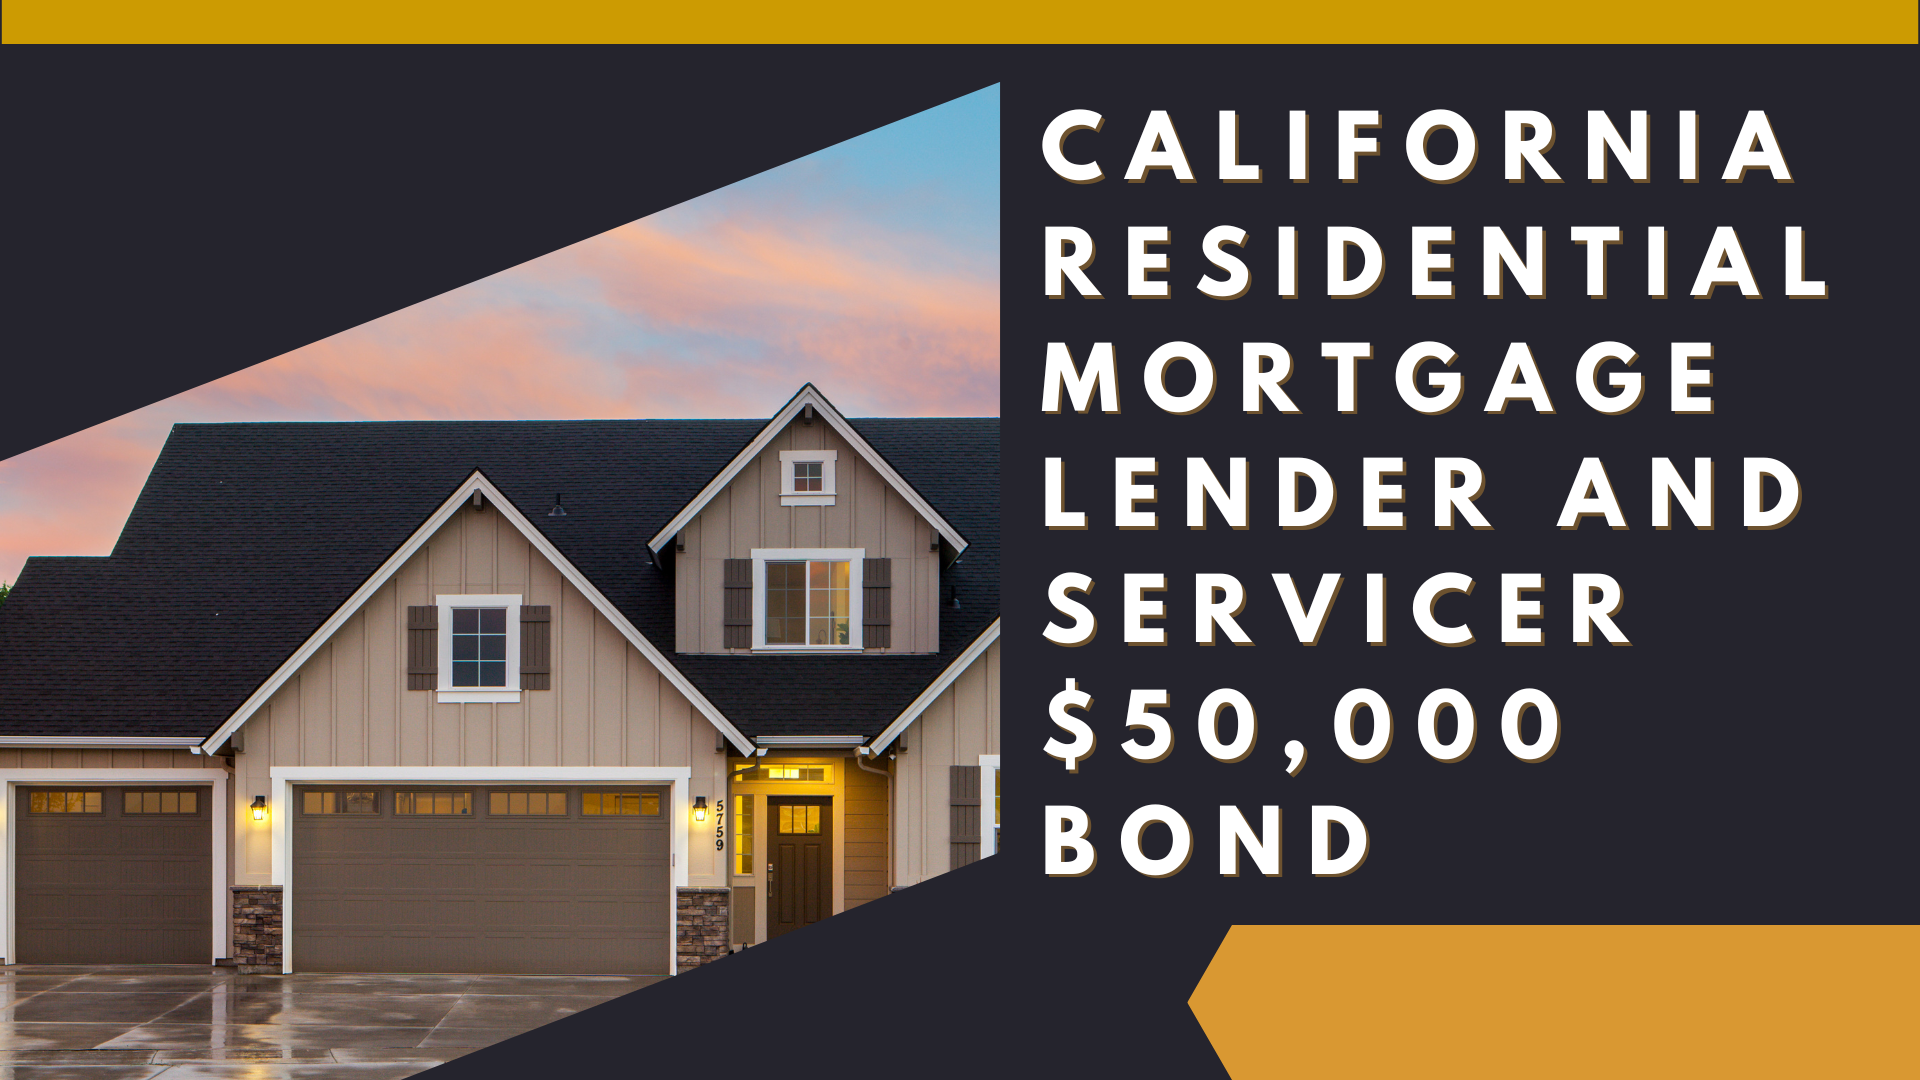 Surety Bond-California Residential Mortgage Lender and Servicer $50,000 Bond